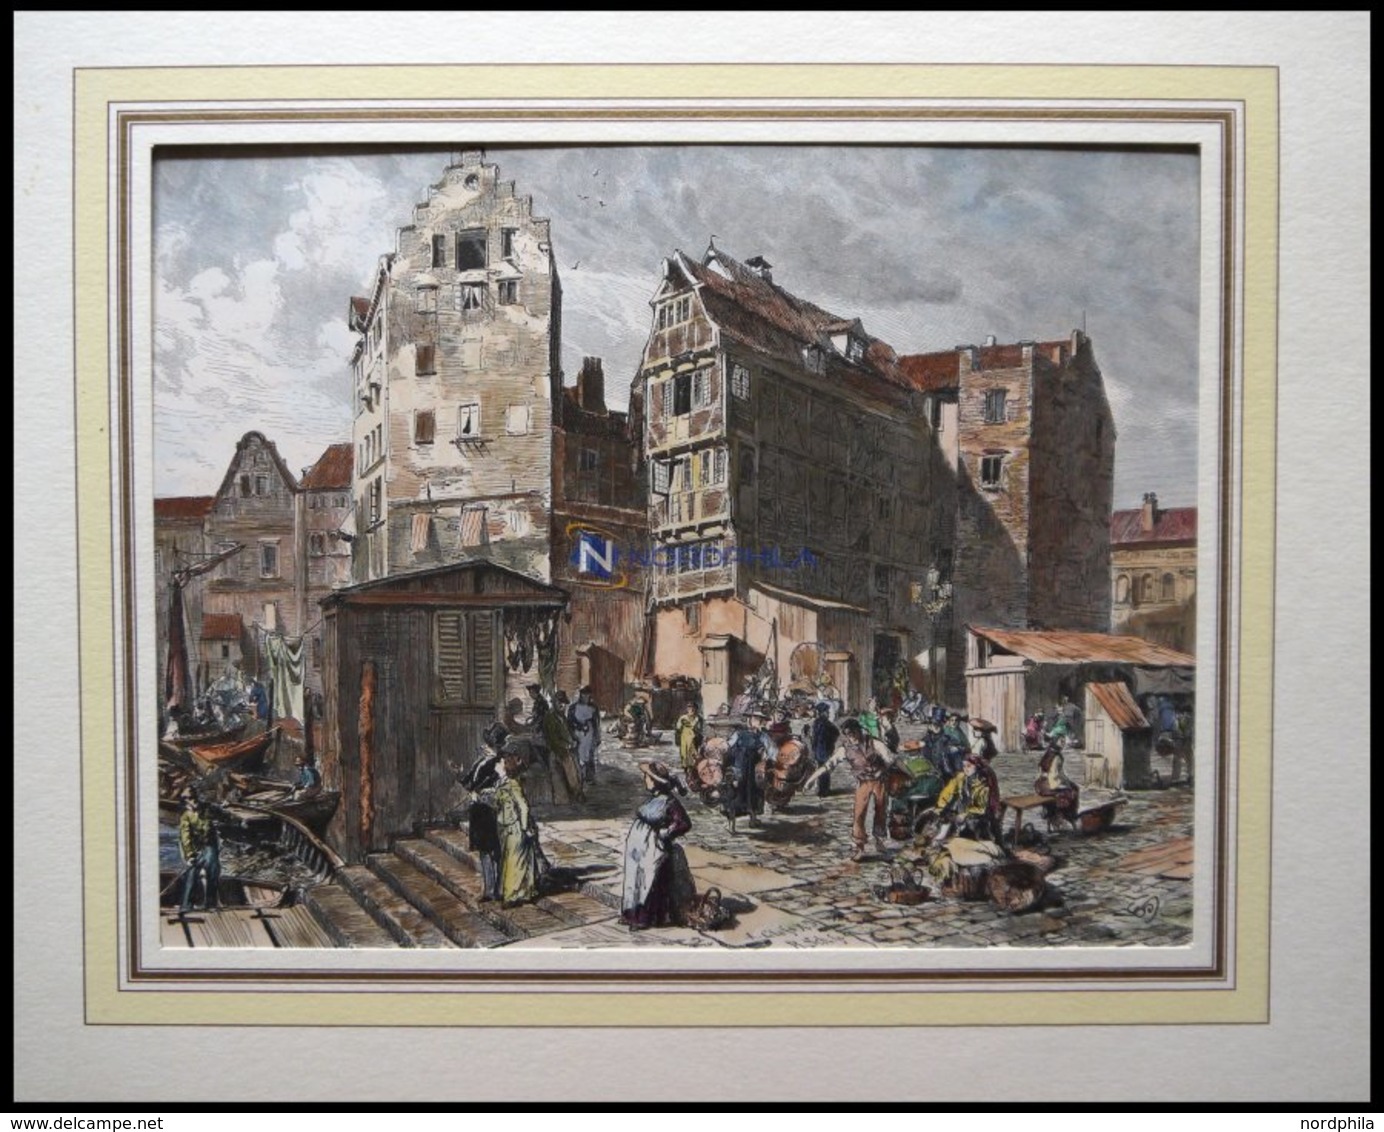 HAMBURG-ALTONA: Markt In Altona, Kol. Holzstich Um 1880 - Lithographien